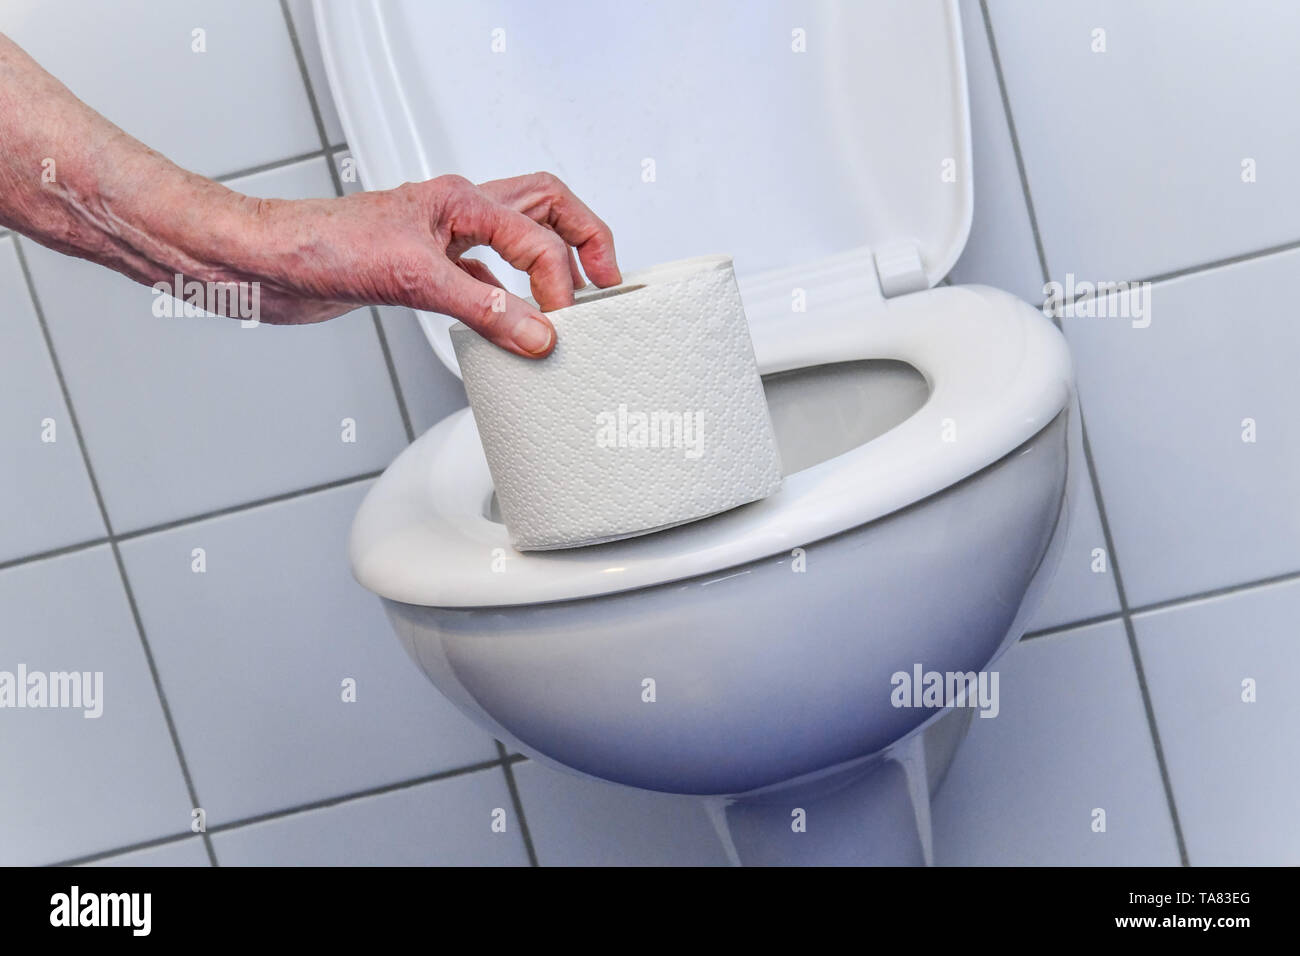 Toilettenpapier, Wc, Klopapier, Toilette Stockfoto